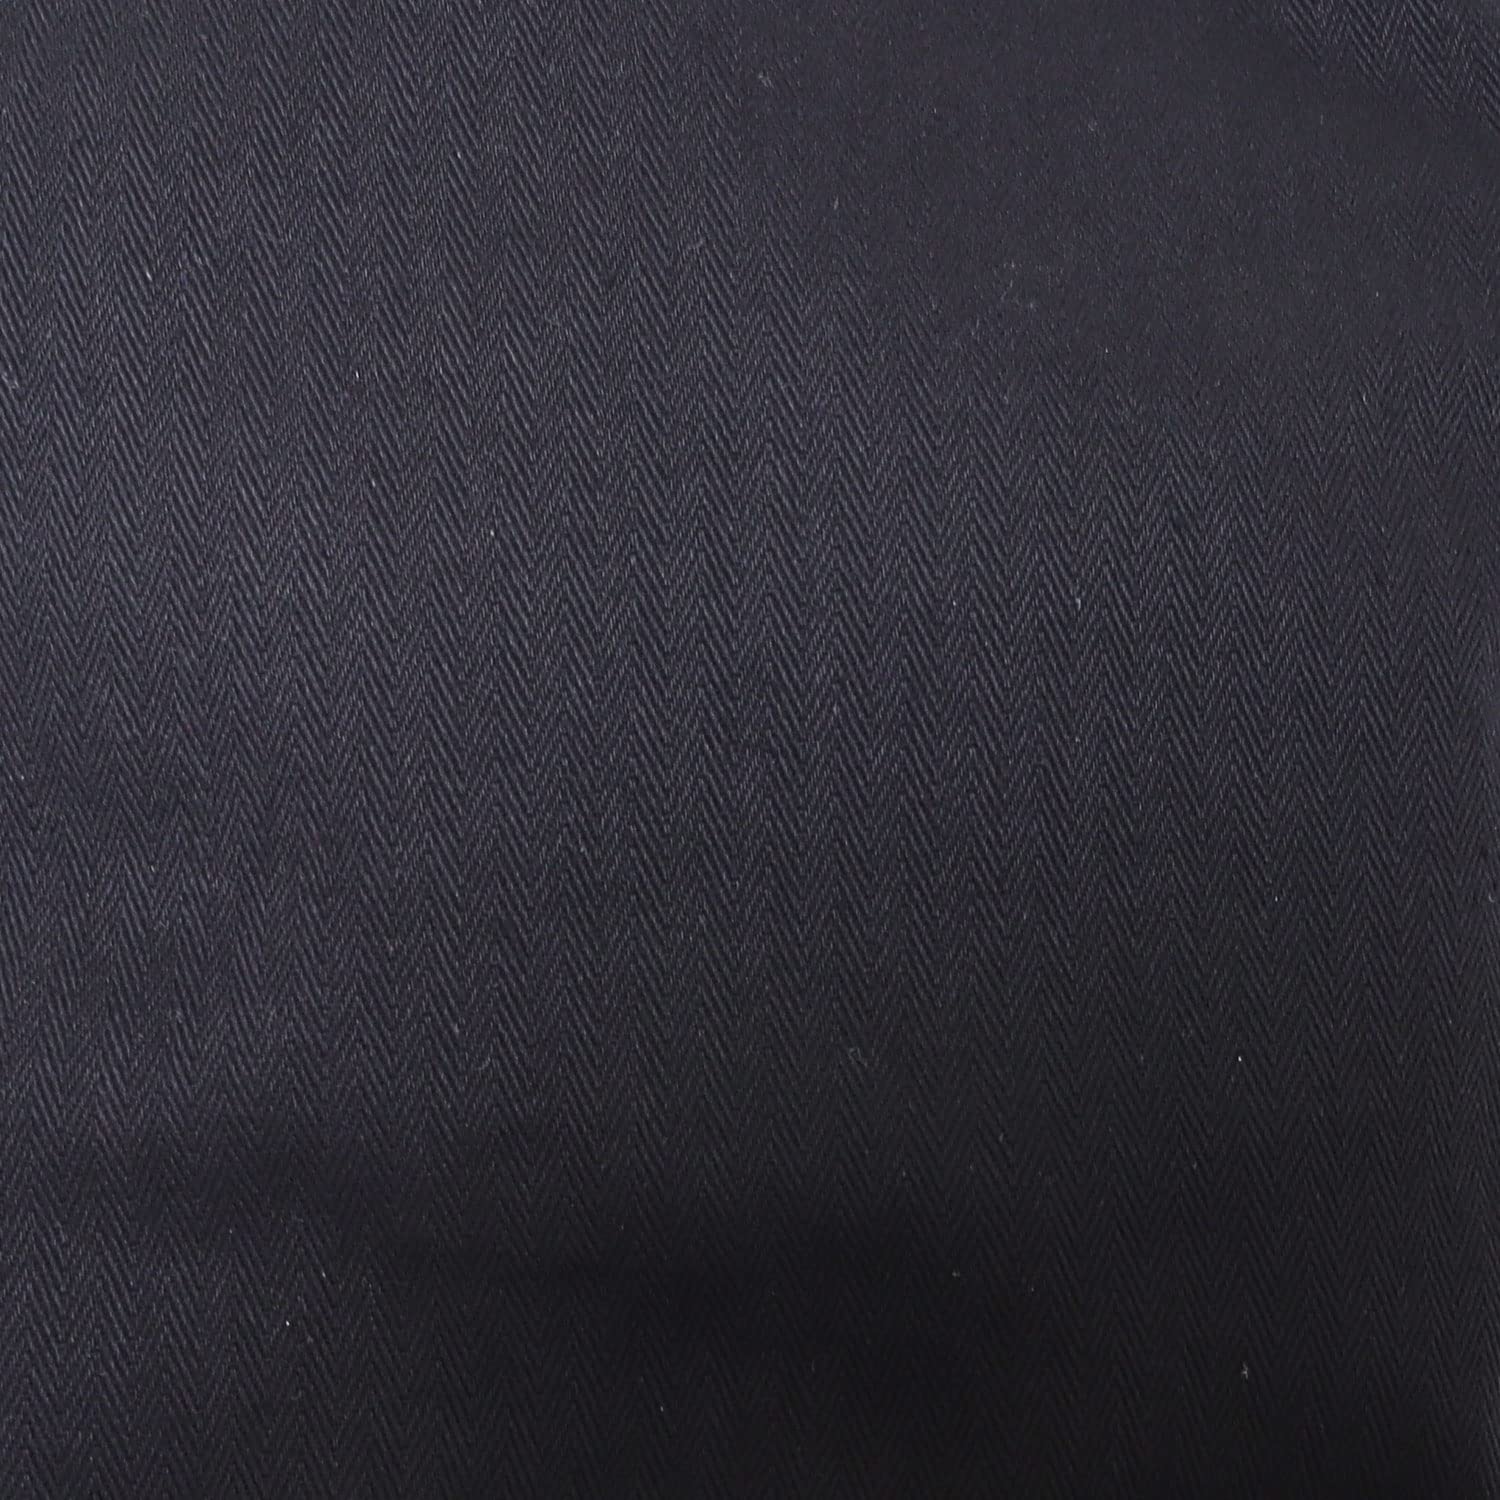 EXAS Men's Hanning, Adjustable Cotton, Herringbone, Side Belt, Up to Approx. 25.6 inches (65 cm), Black, Black